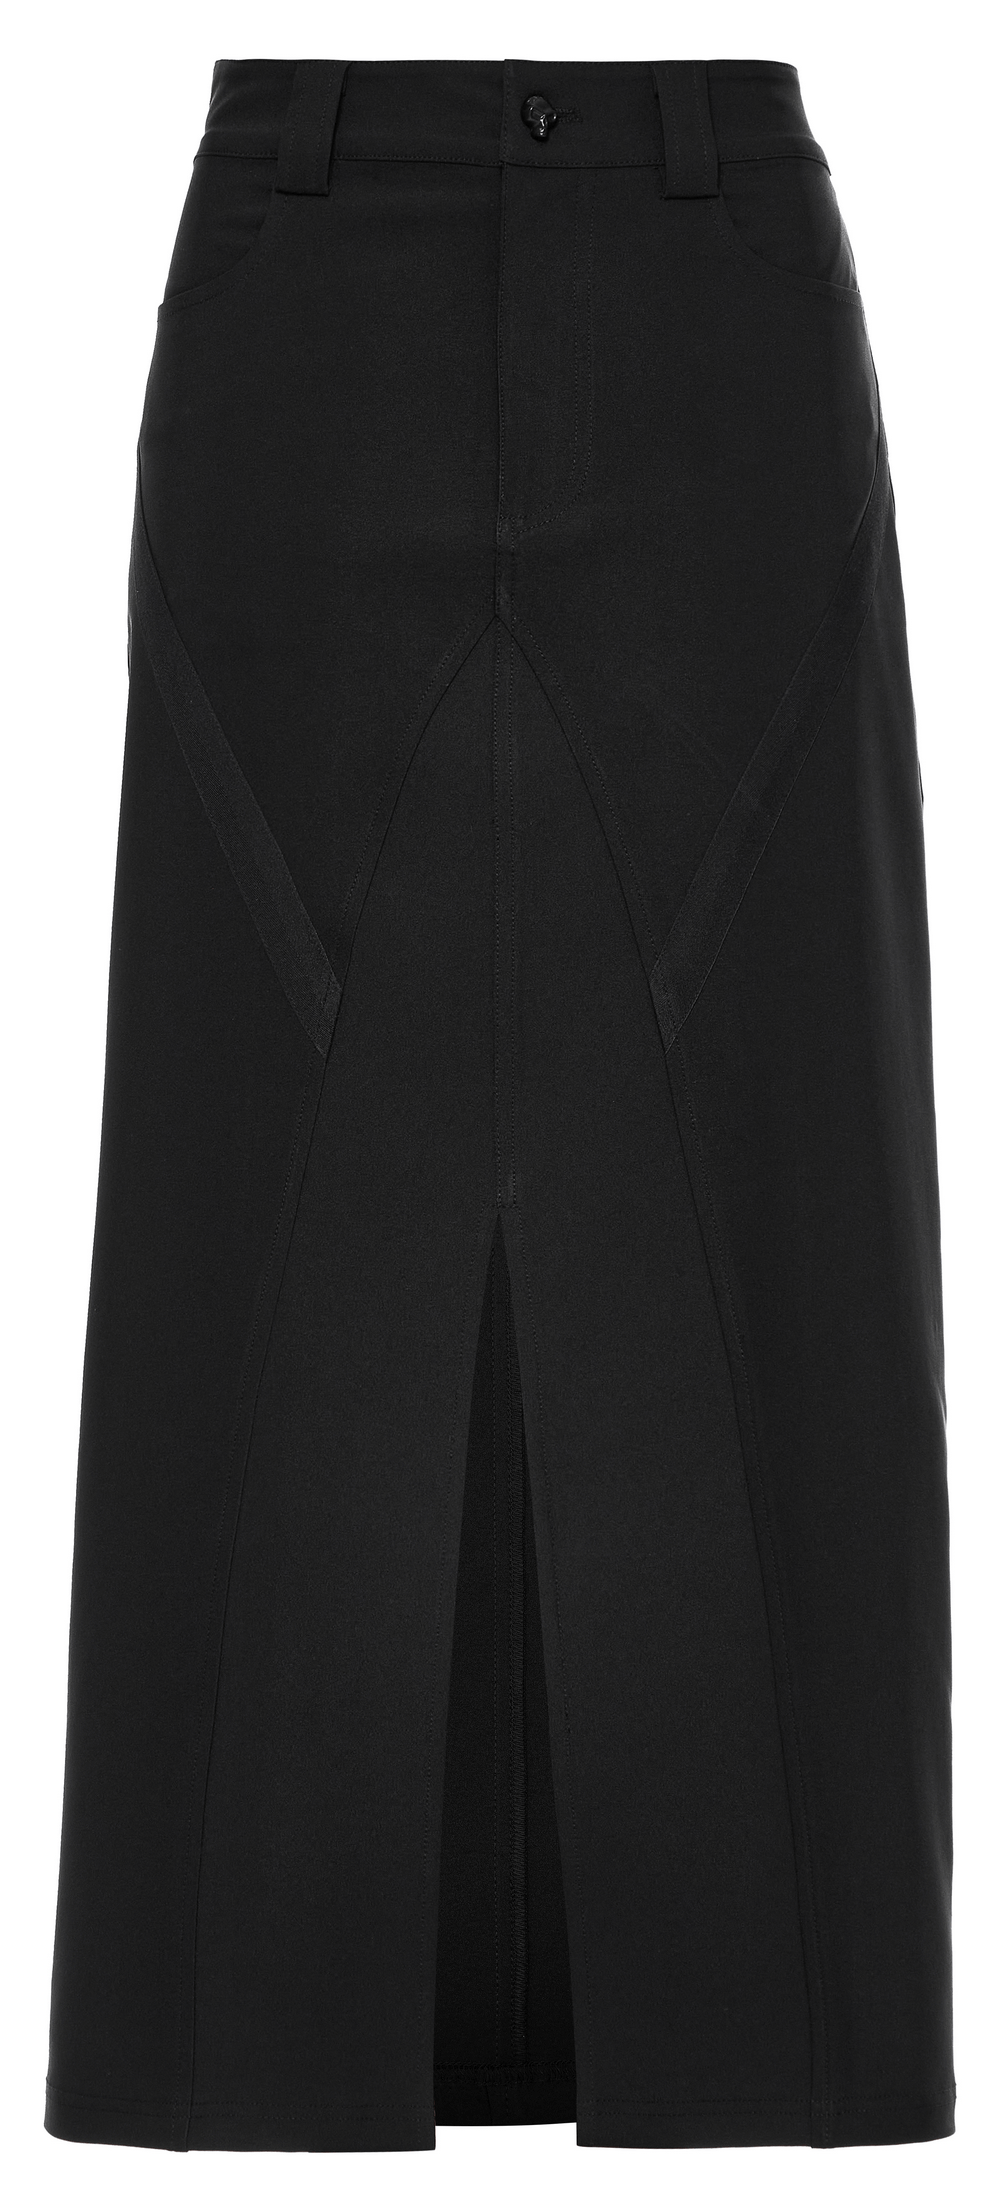 Punk Rave Black V-Cut Front Slit A-Line Midi Skirt